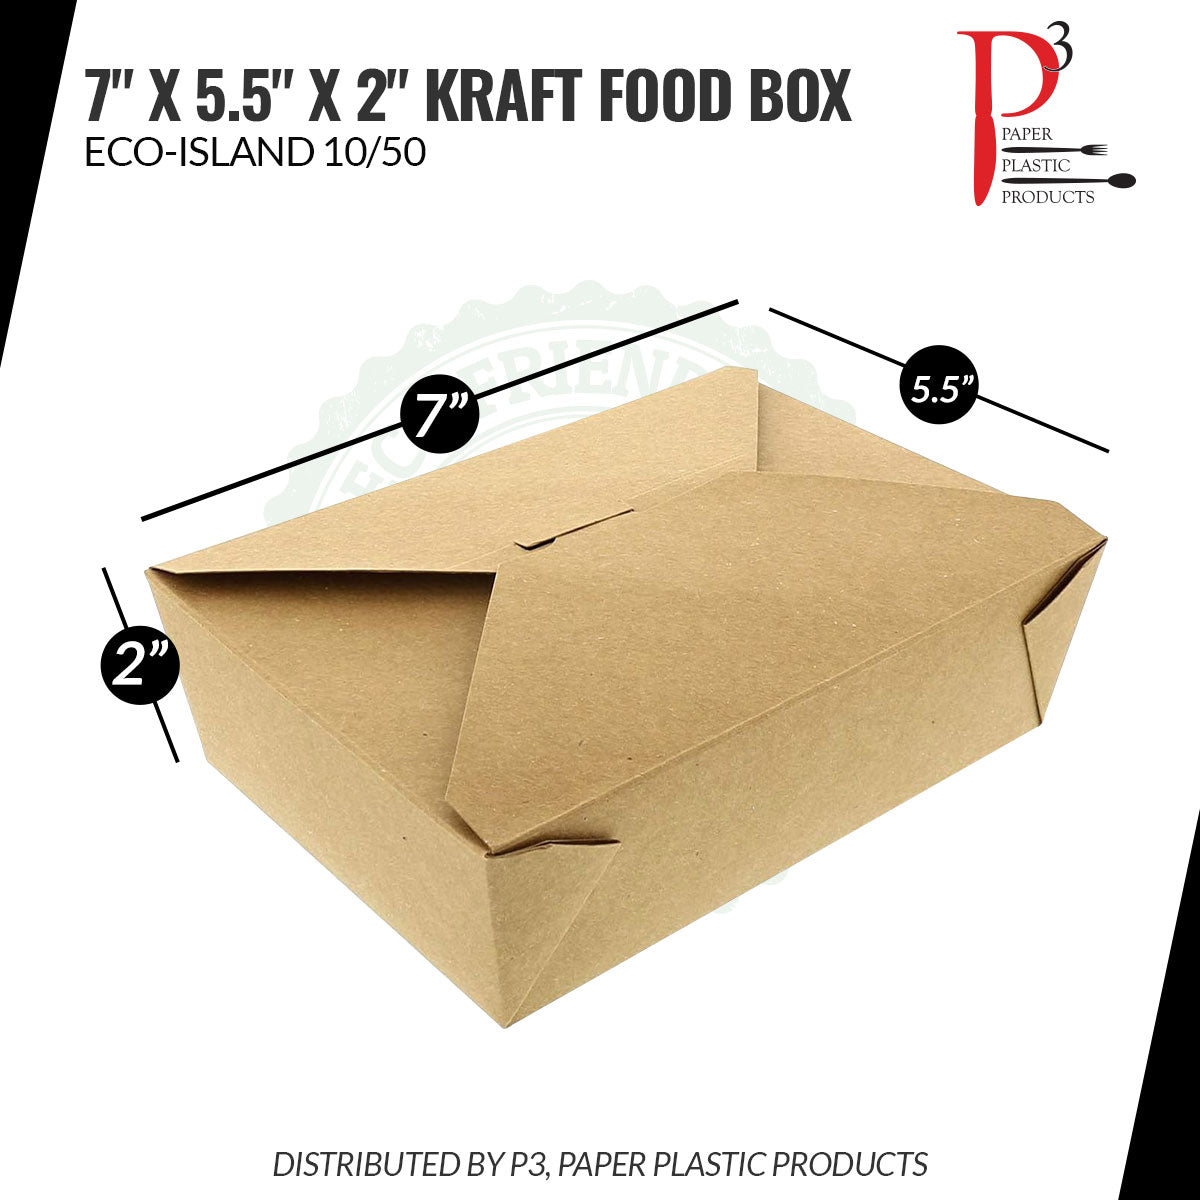 Kraft Food Box 7" x 5.5" x 2" Eco-Island 4/50